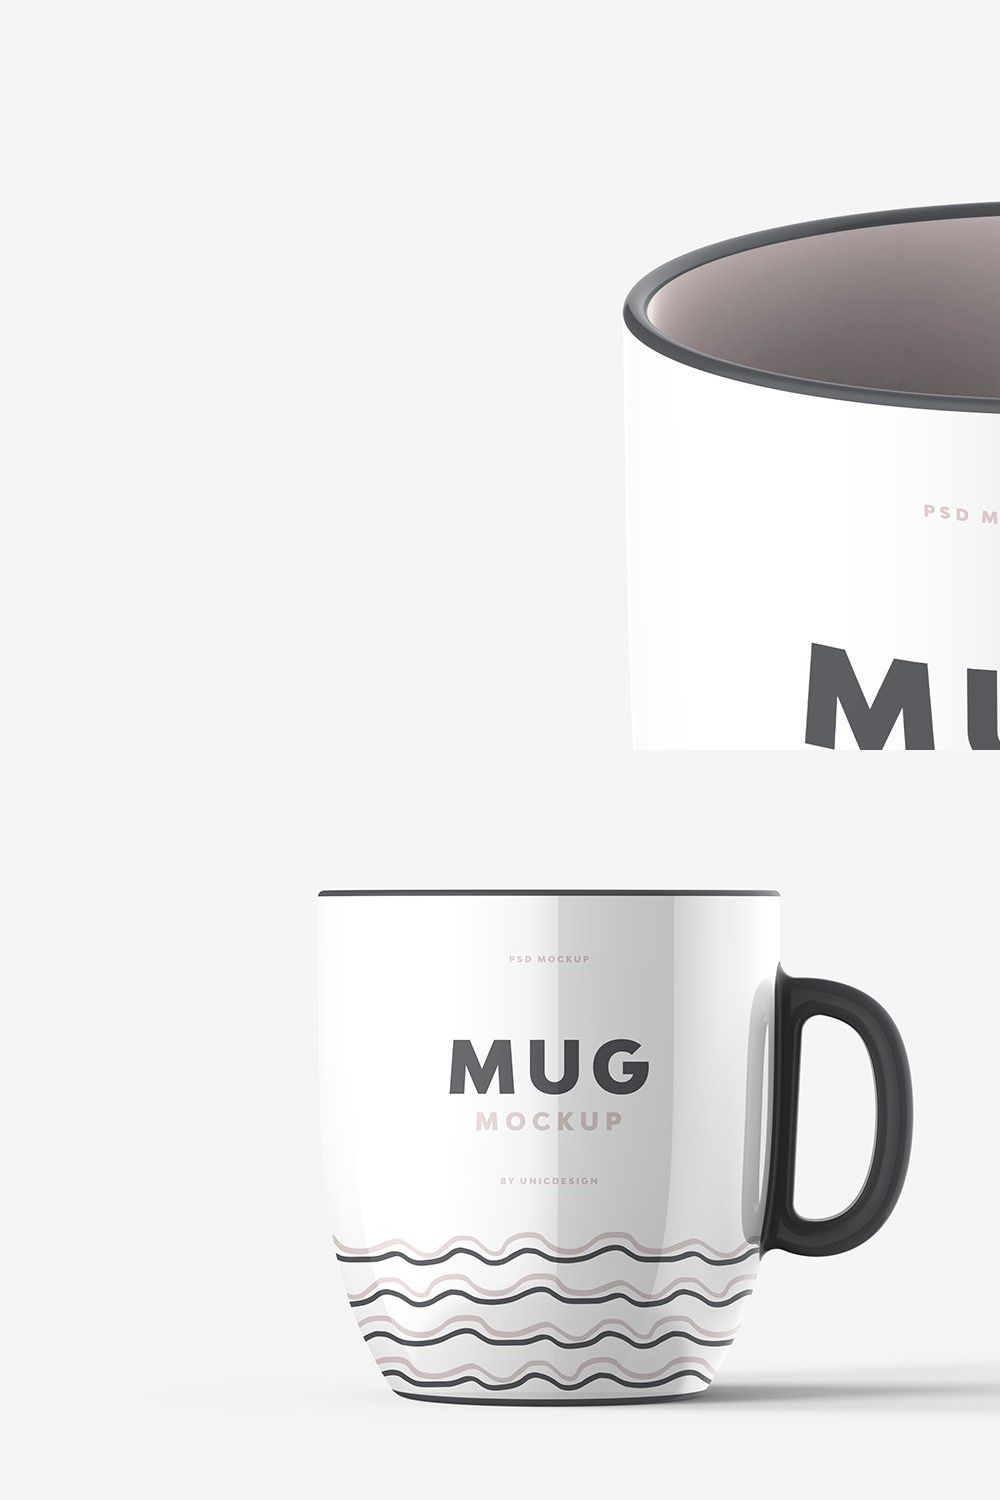 Mug Mockup pinterest preview image.